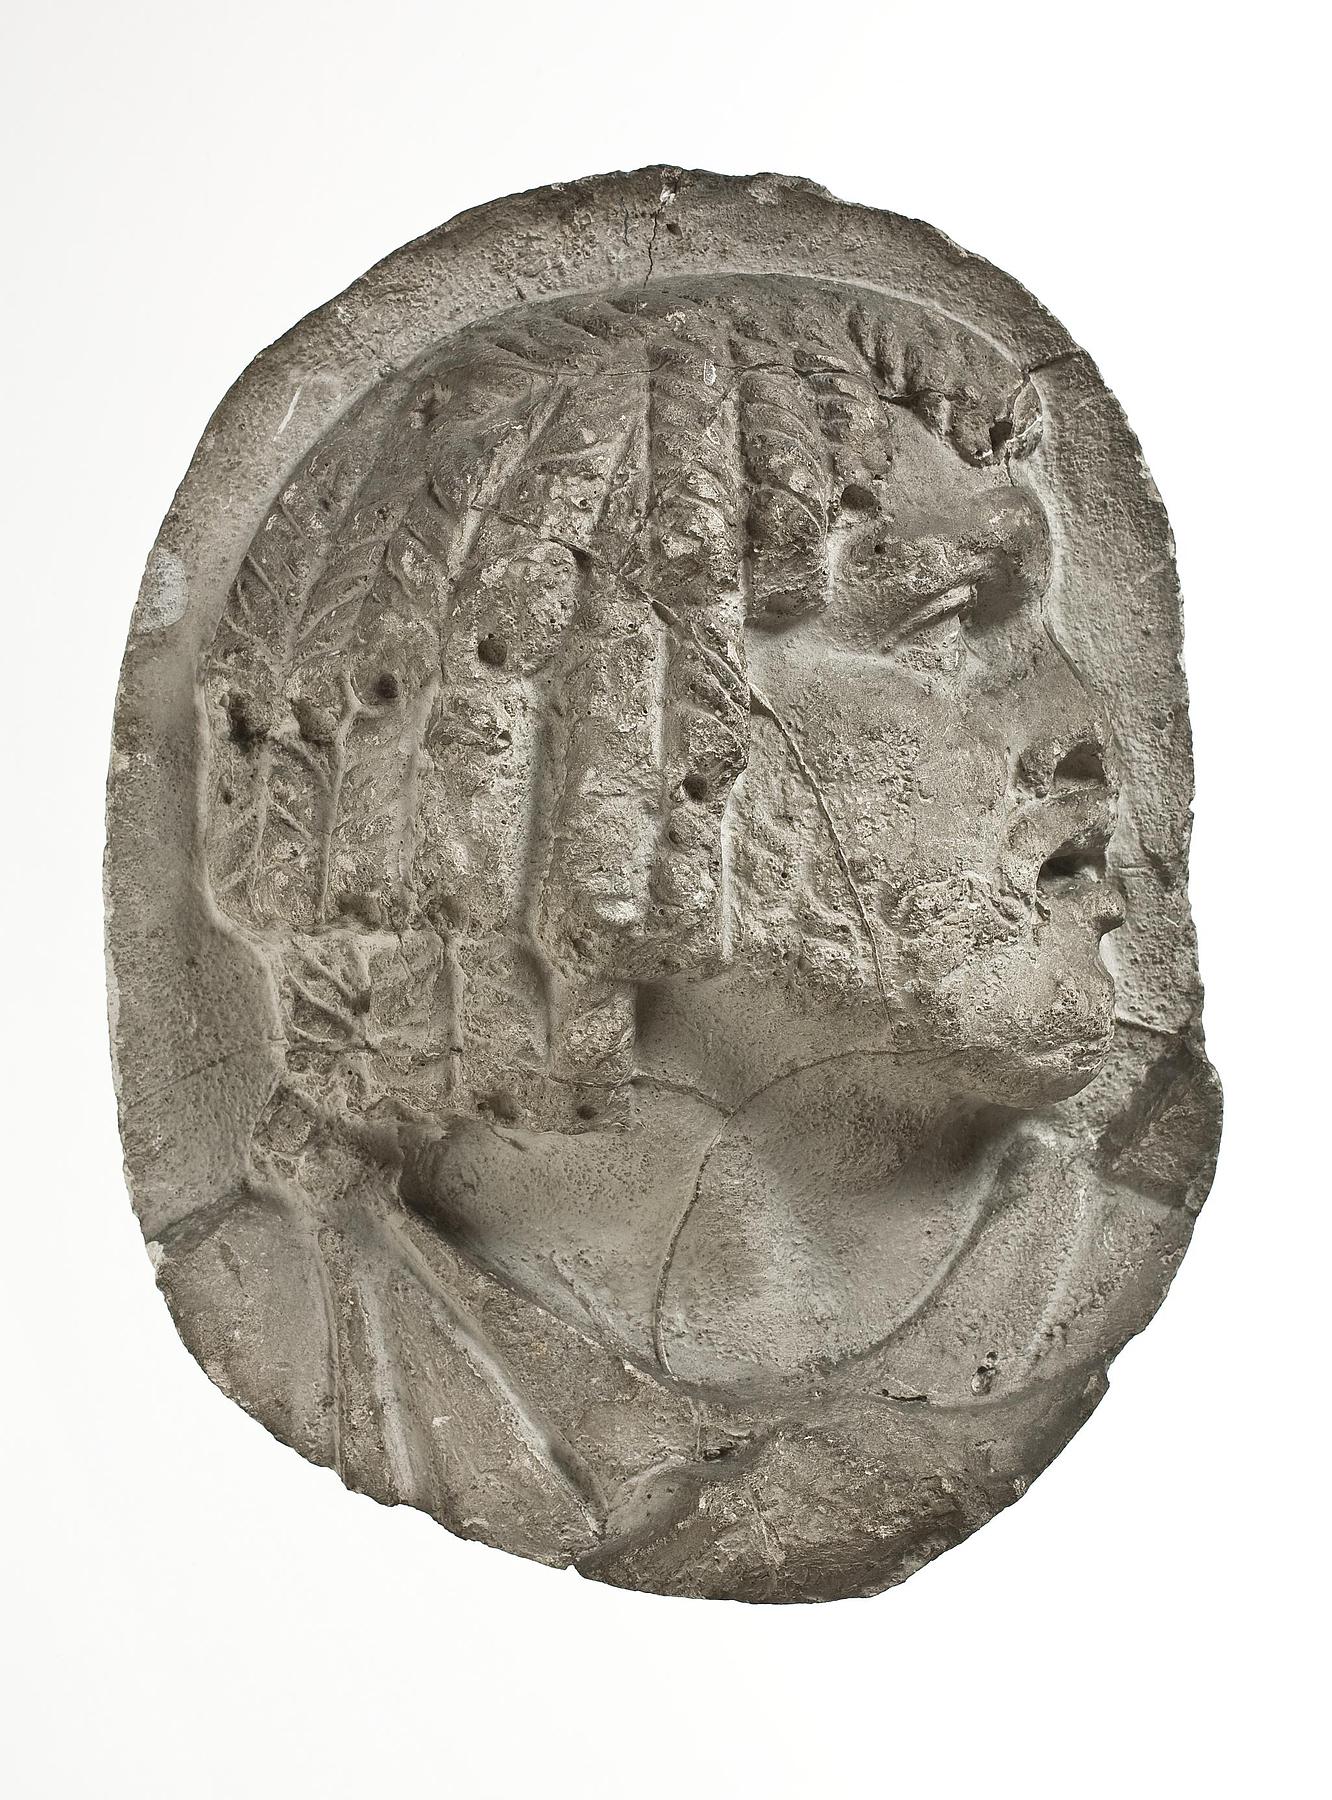 Heads of Barbarian horsemen, L334a